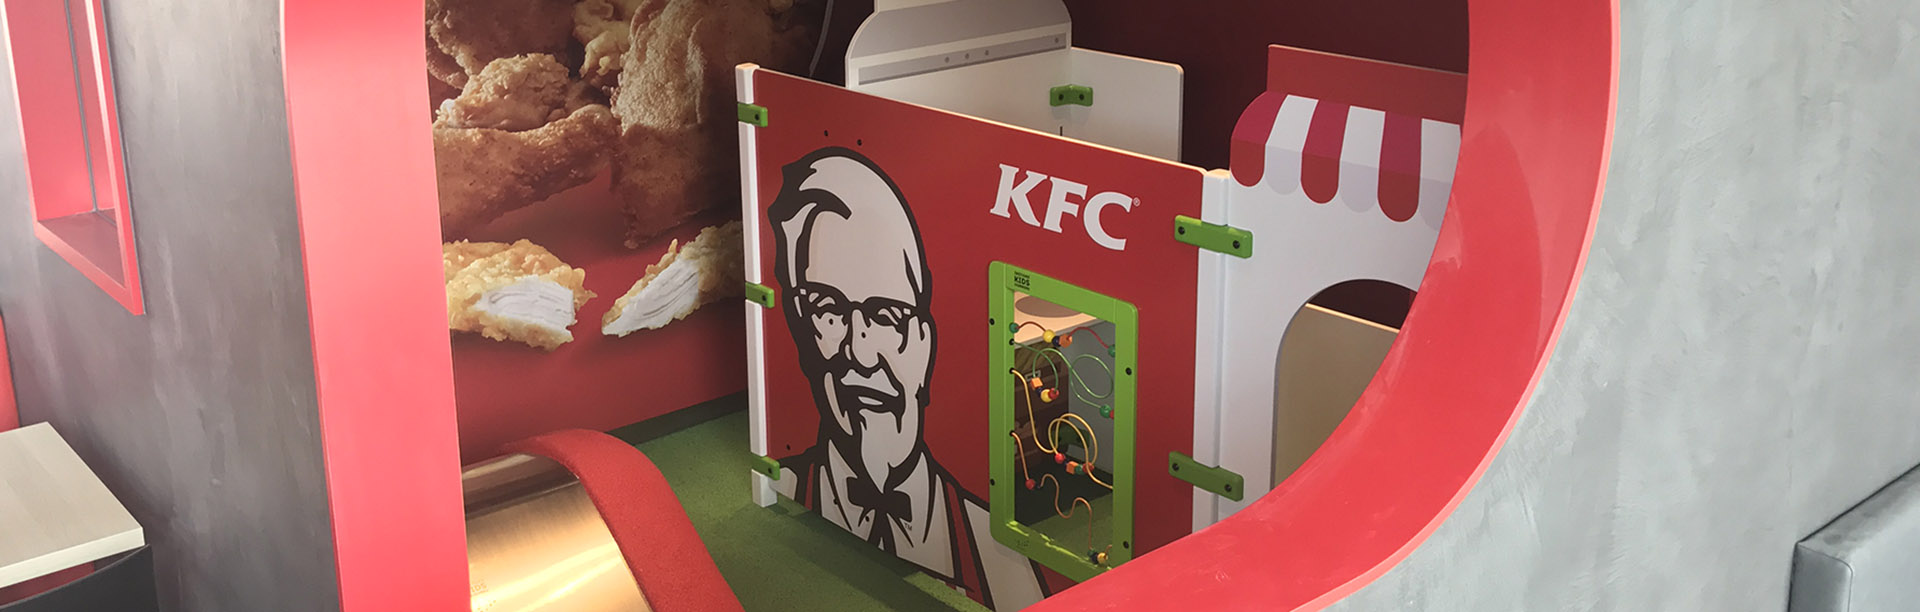 this image shows a kids corner at KFC